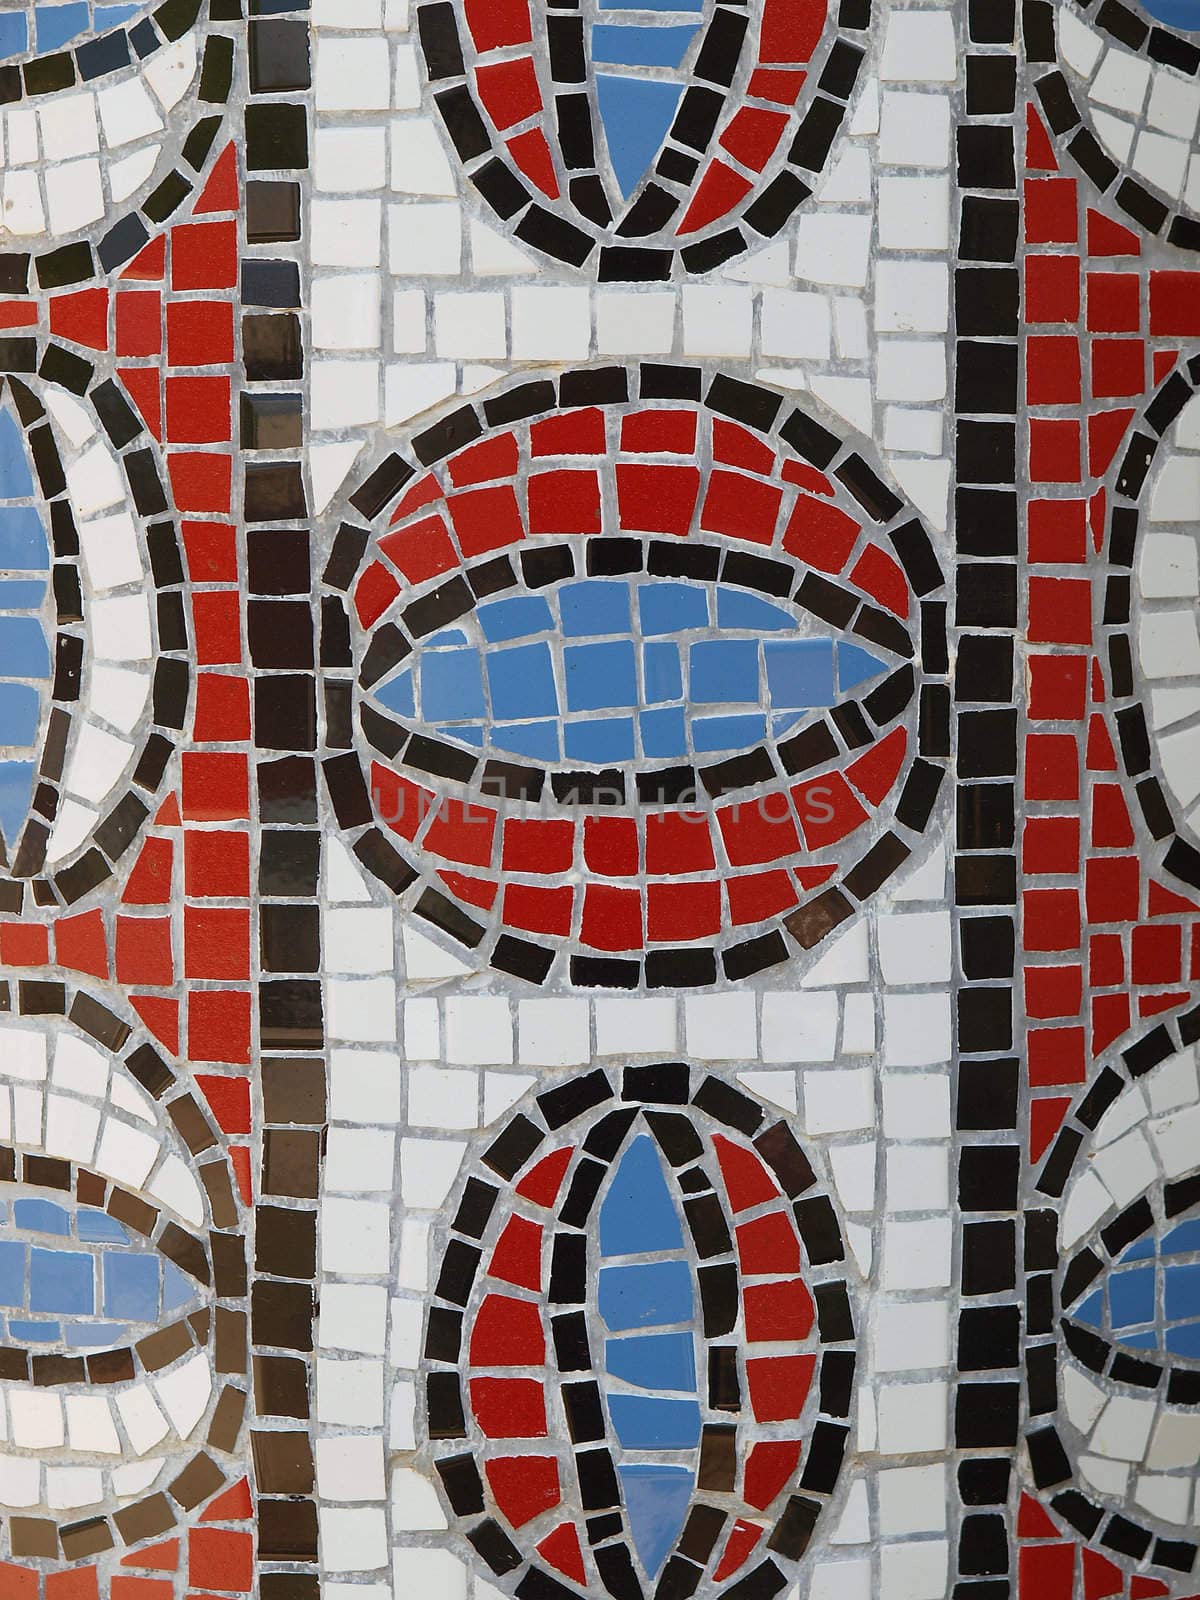 Handmade mosaic background by Ronyzmbow